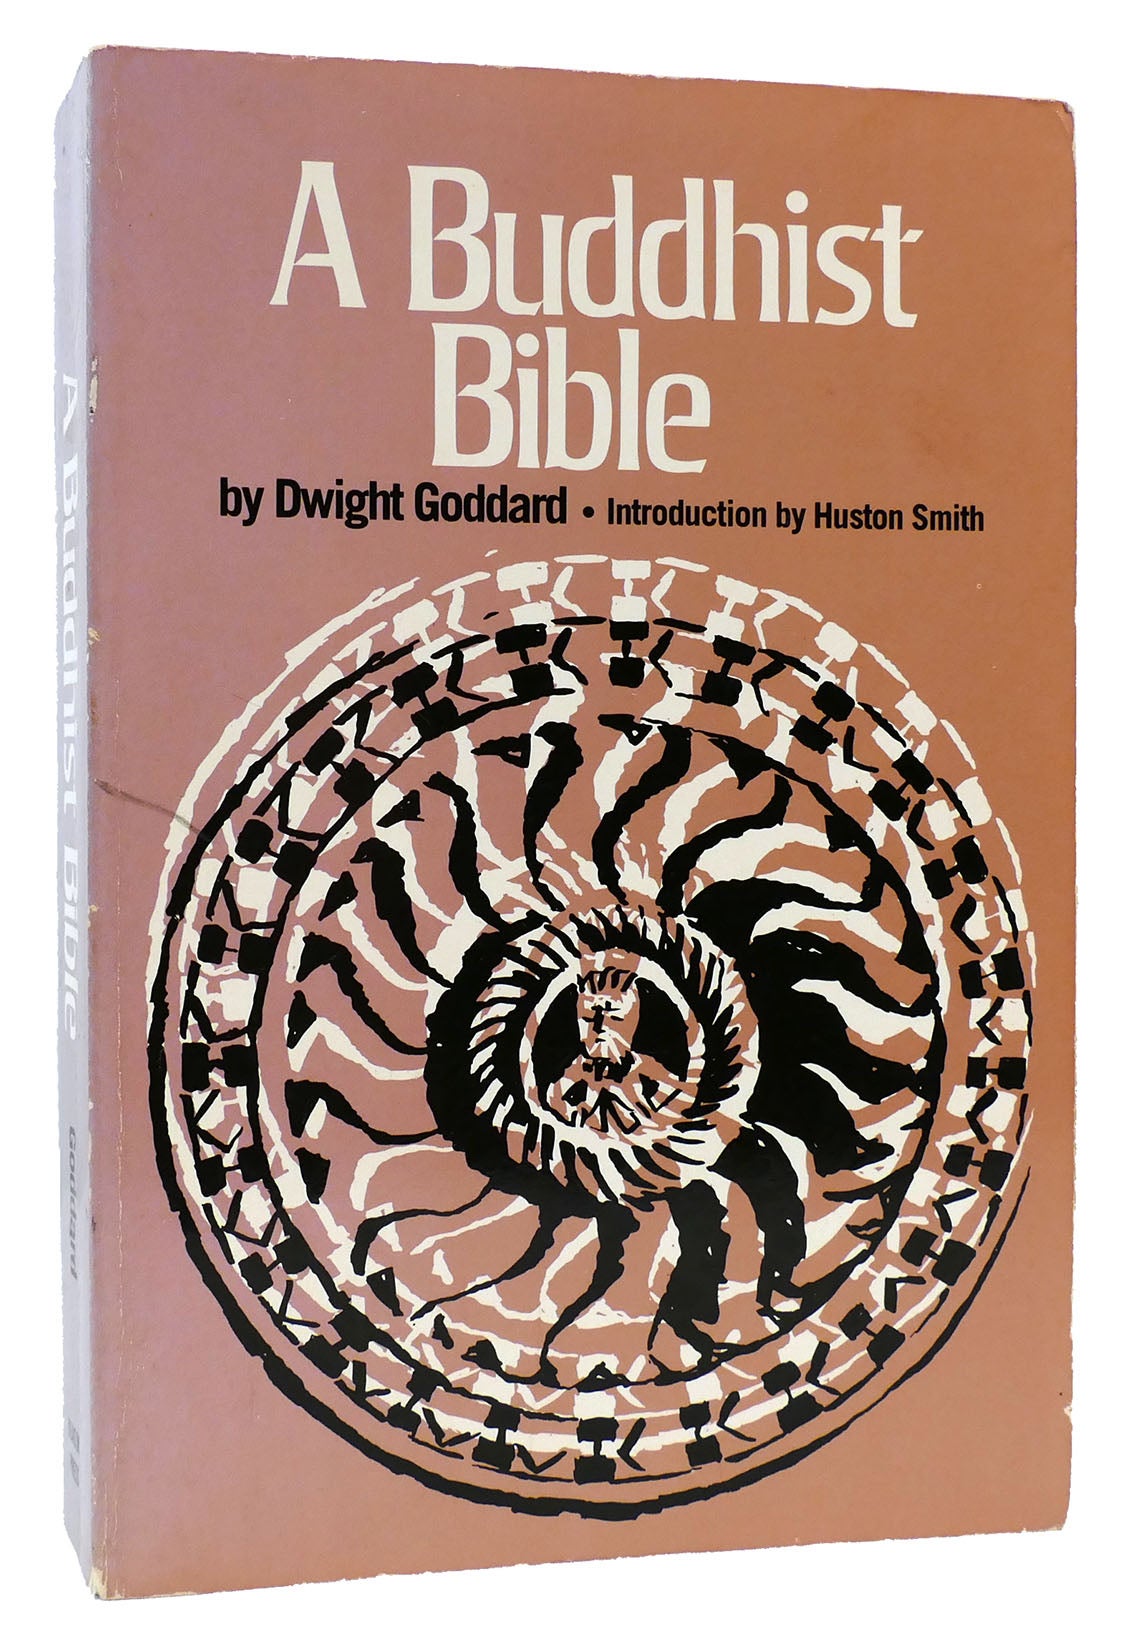 Uma Bíblia Budista (traduzido) eBook de Dwight Goddard - EPUB Livro